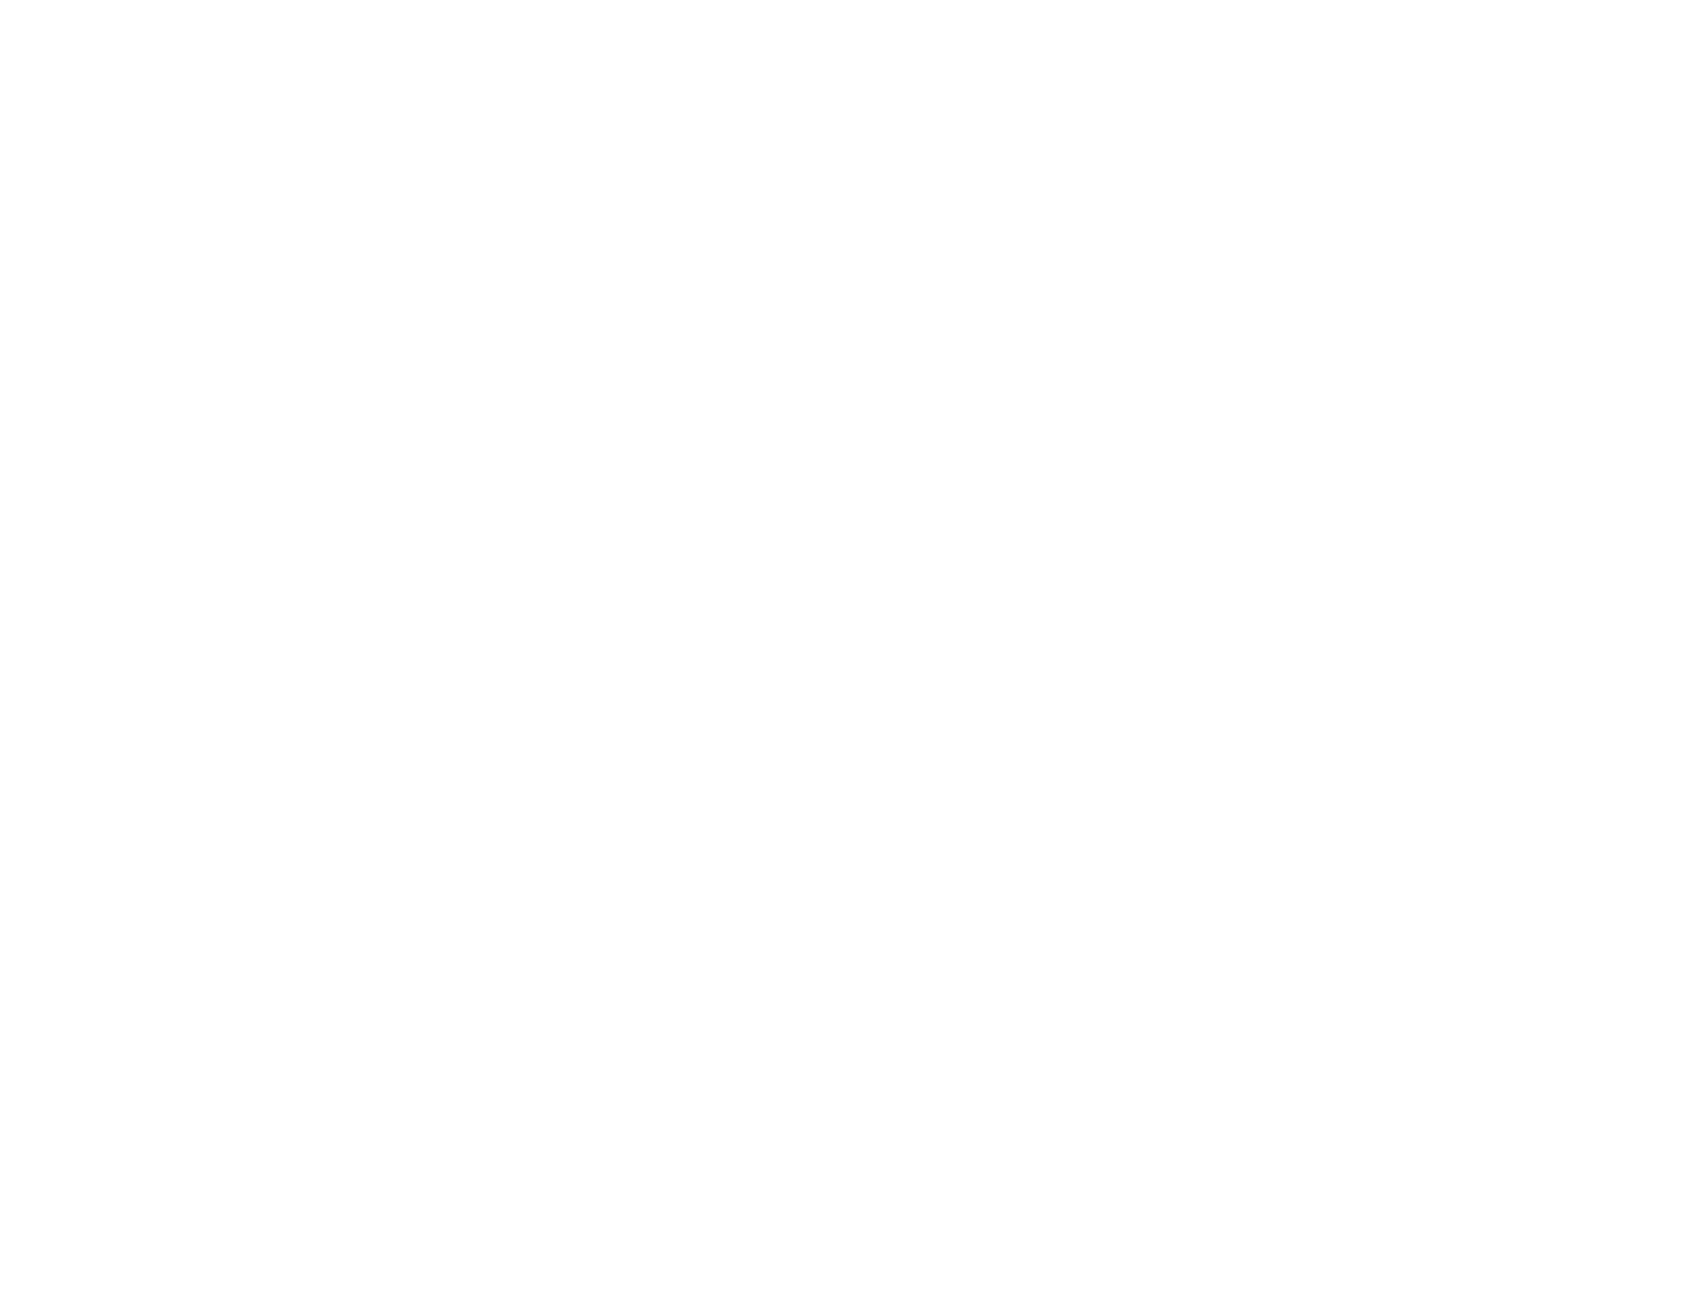 Sealyham Terrier silhouette